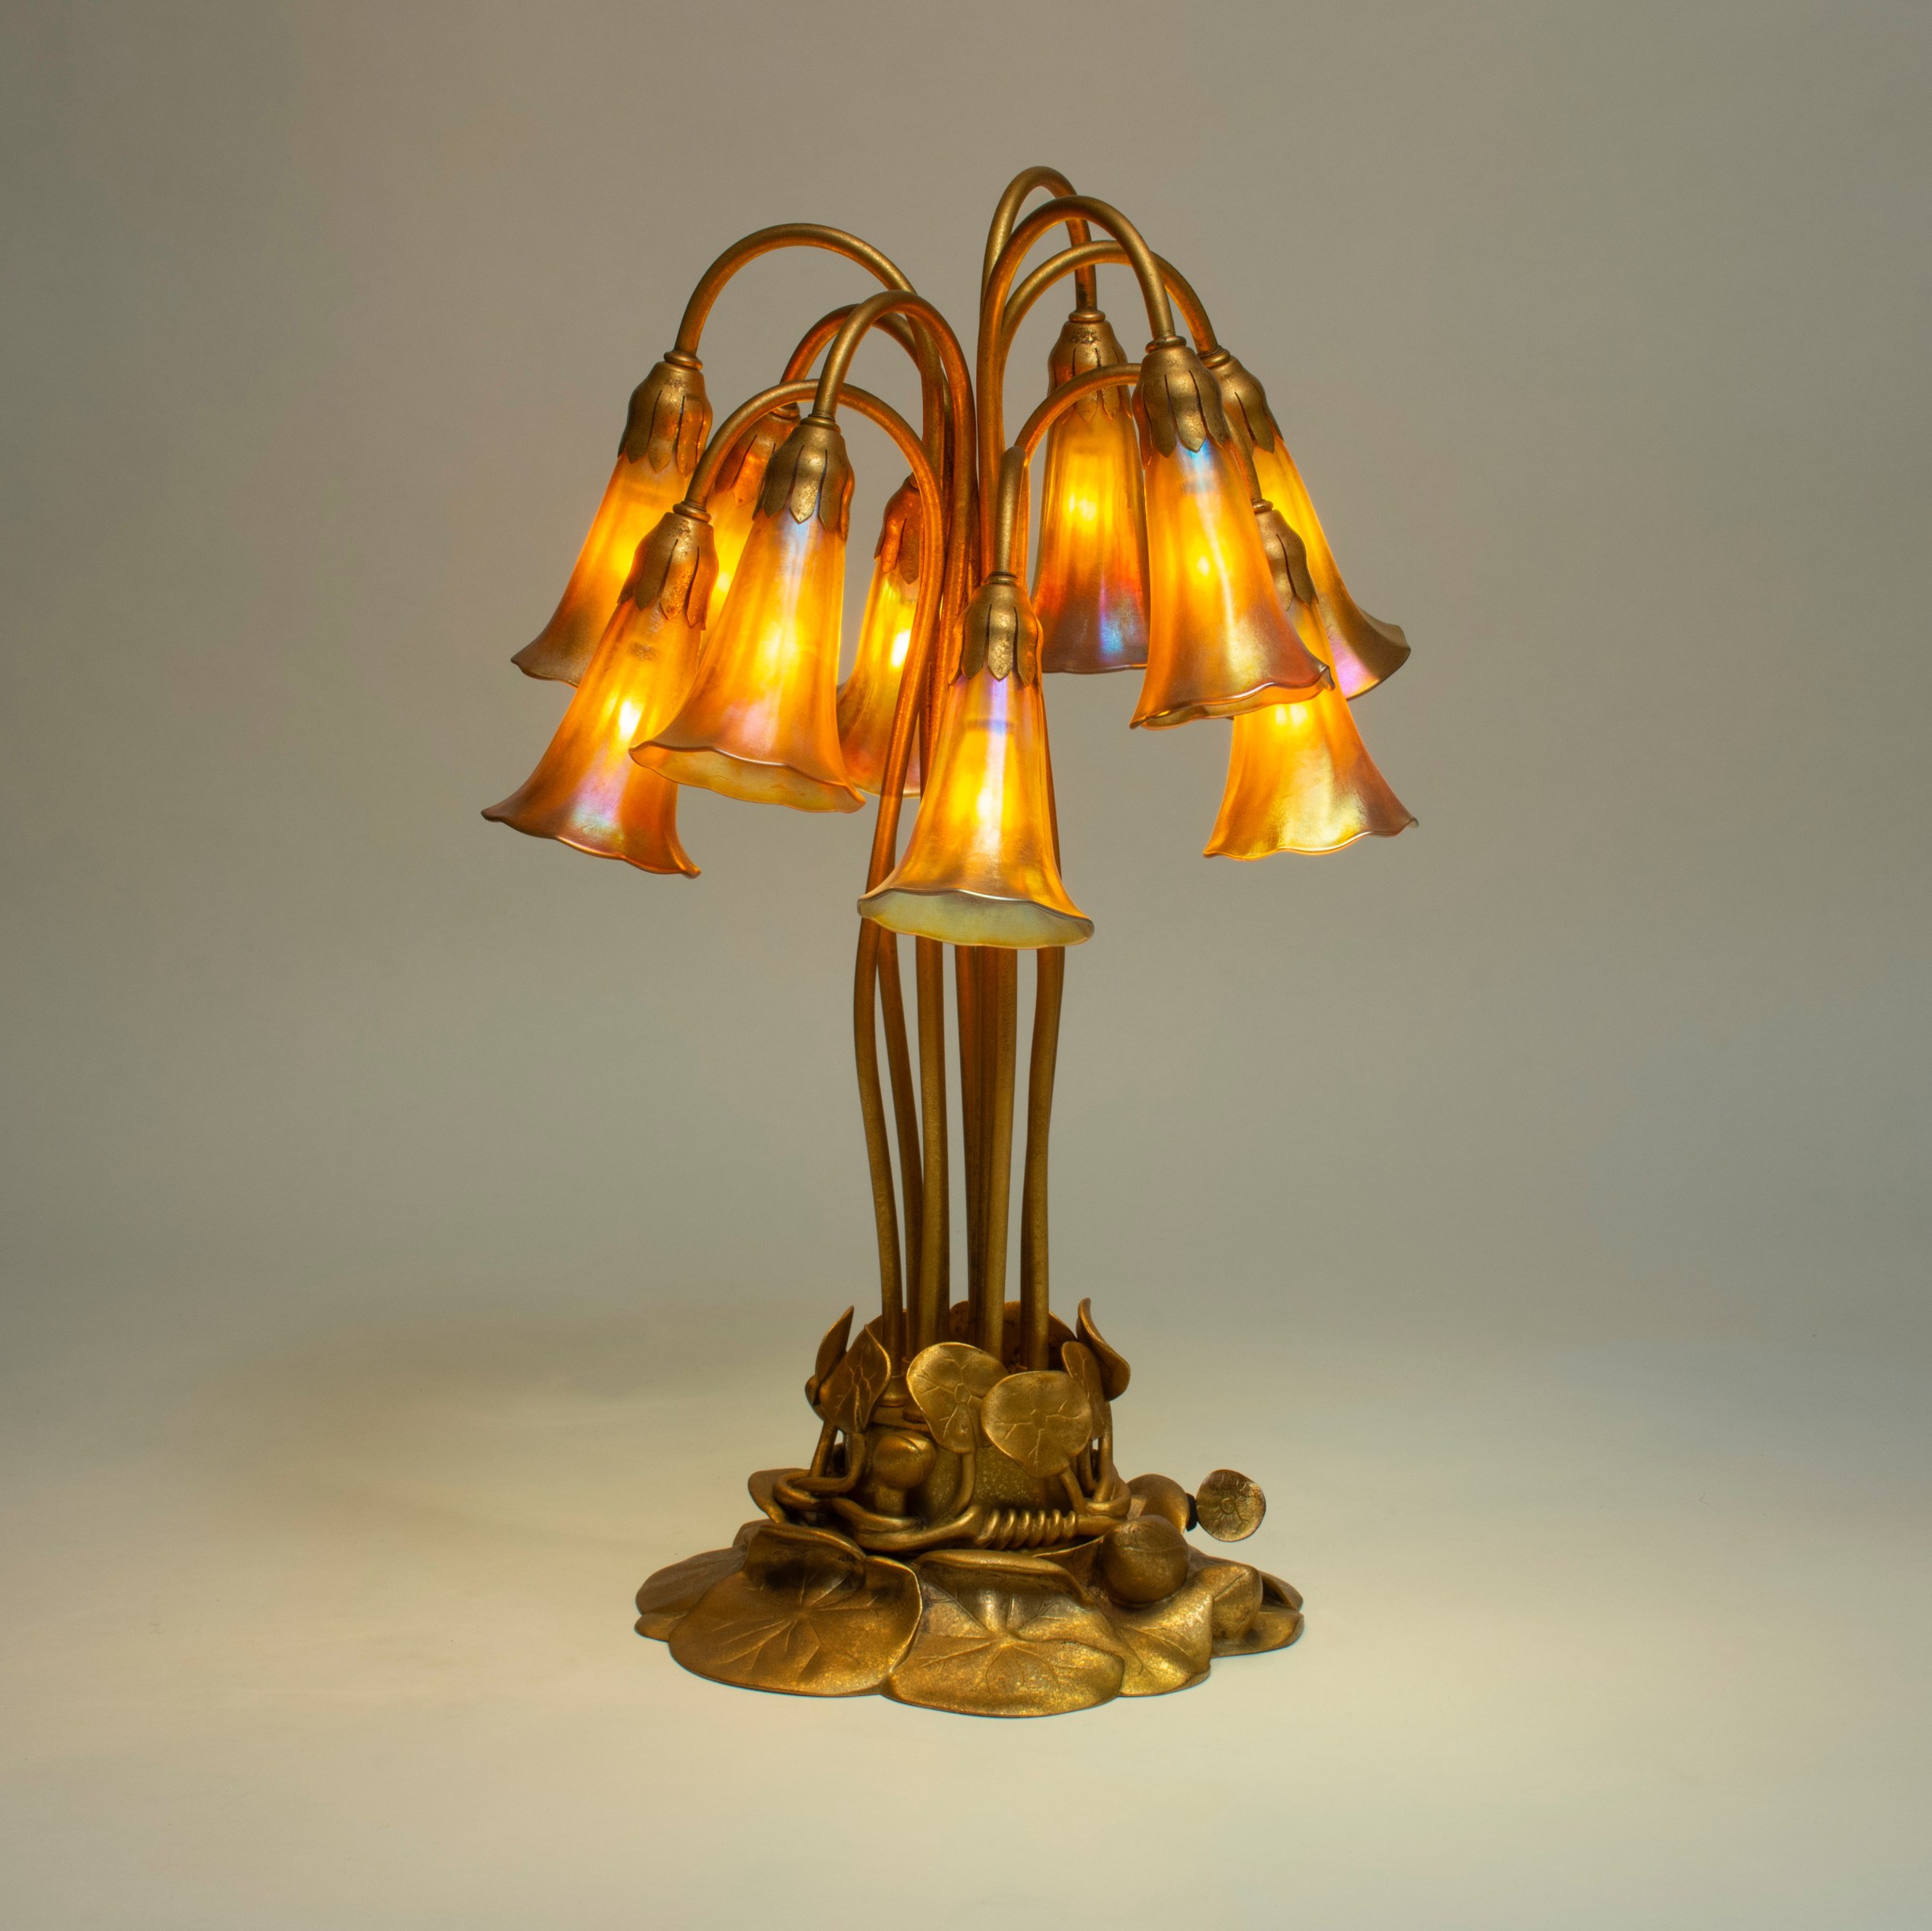 tiffany studios lily lamp - gold patina - illuminated, the gold favrile glass shades providing a rich warm glow.